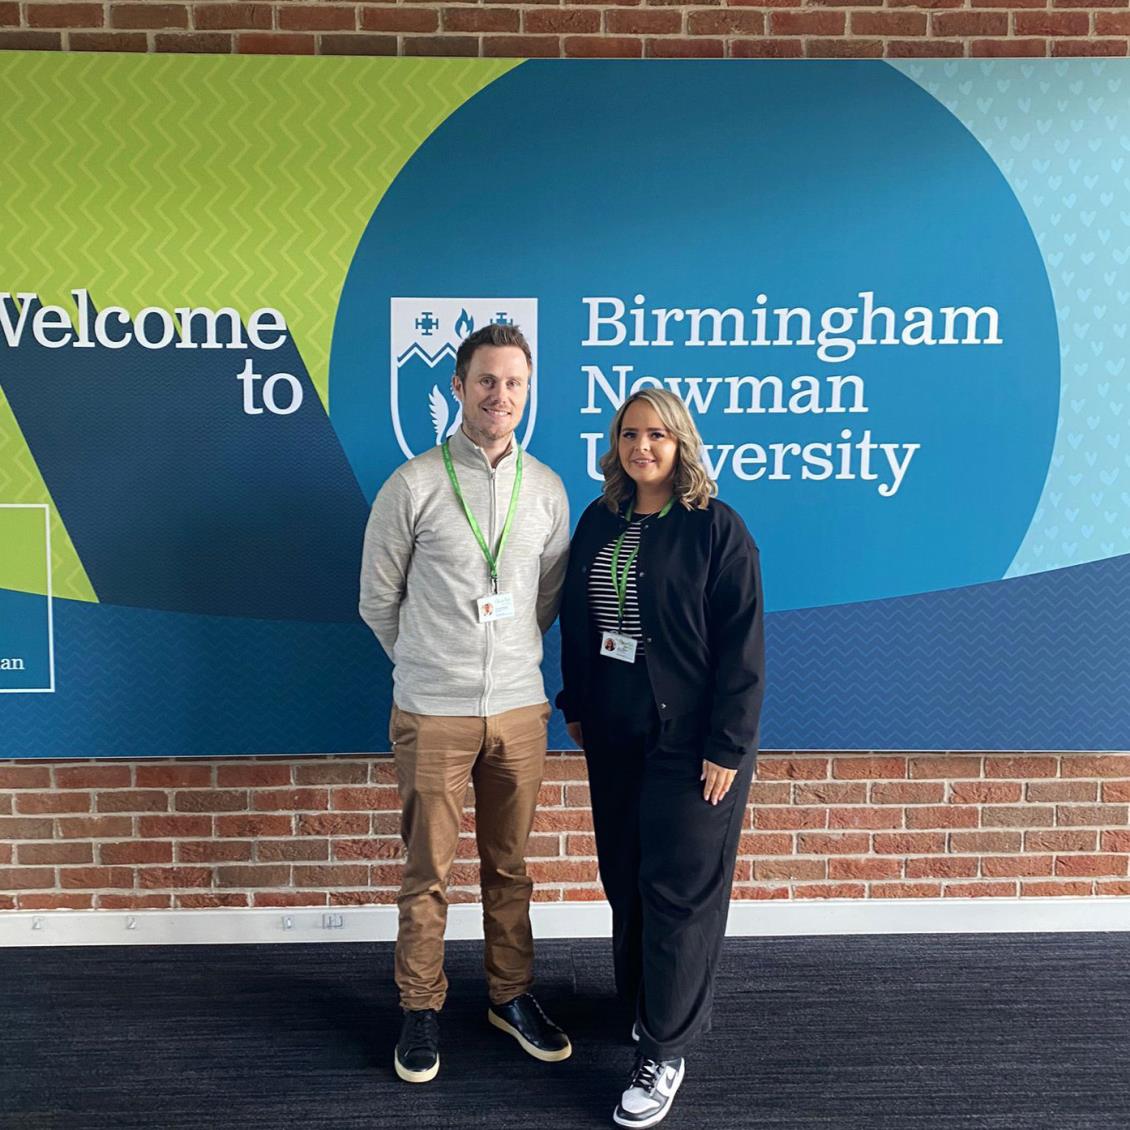 Flourish Education met Birmingham Newman University ECT’s today!